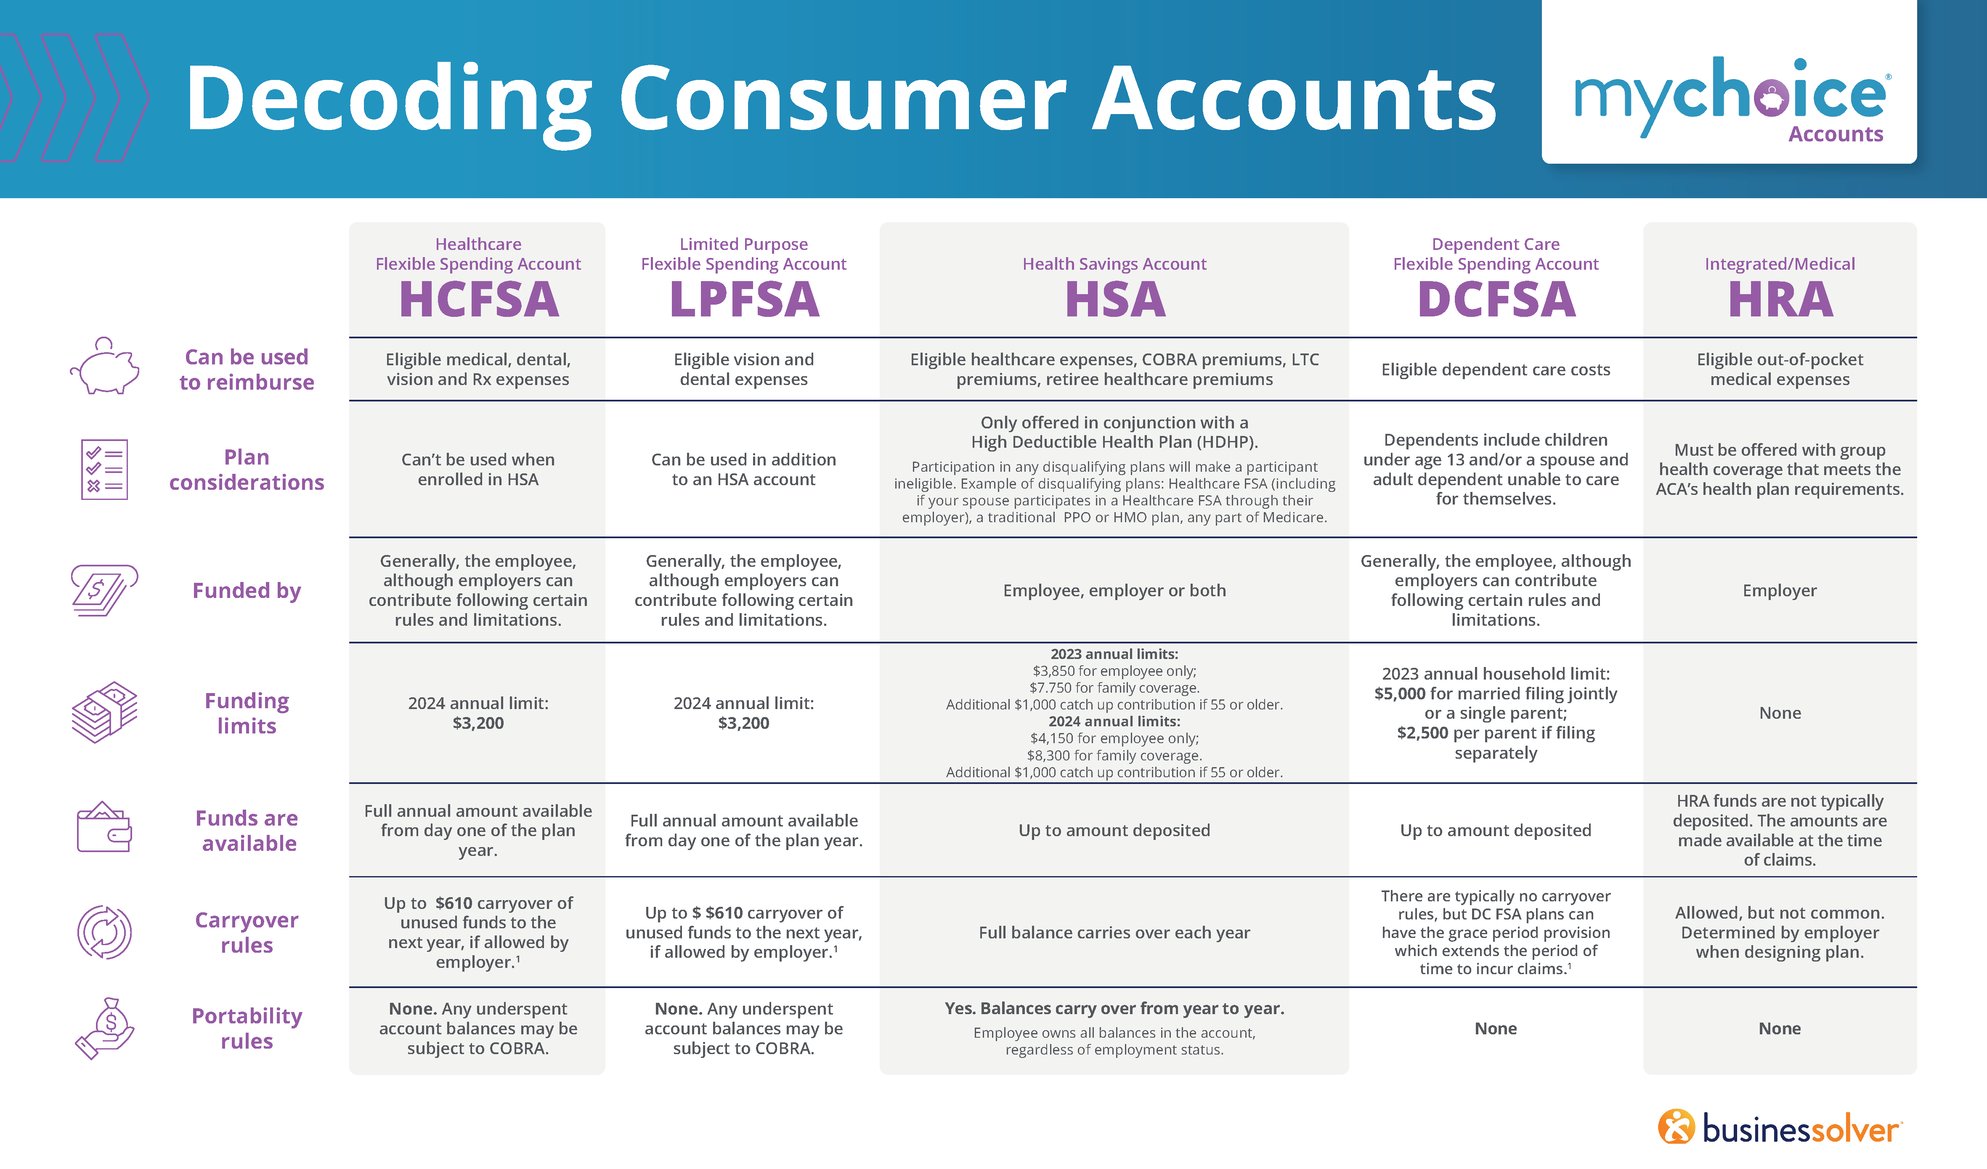 Decoding Consumer Accounts 2023